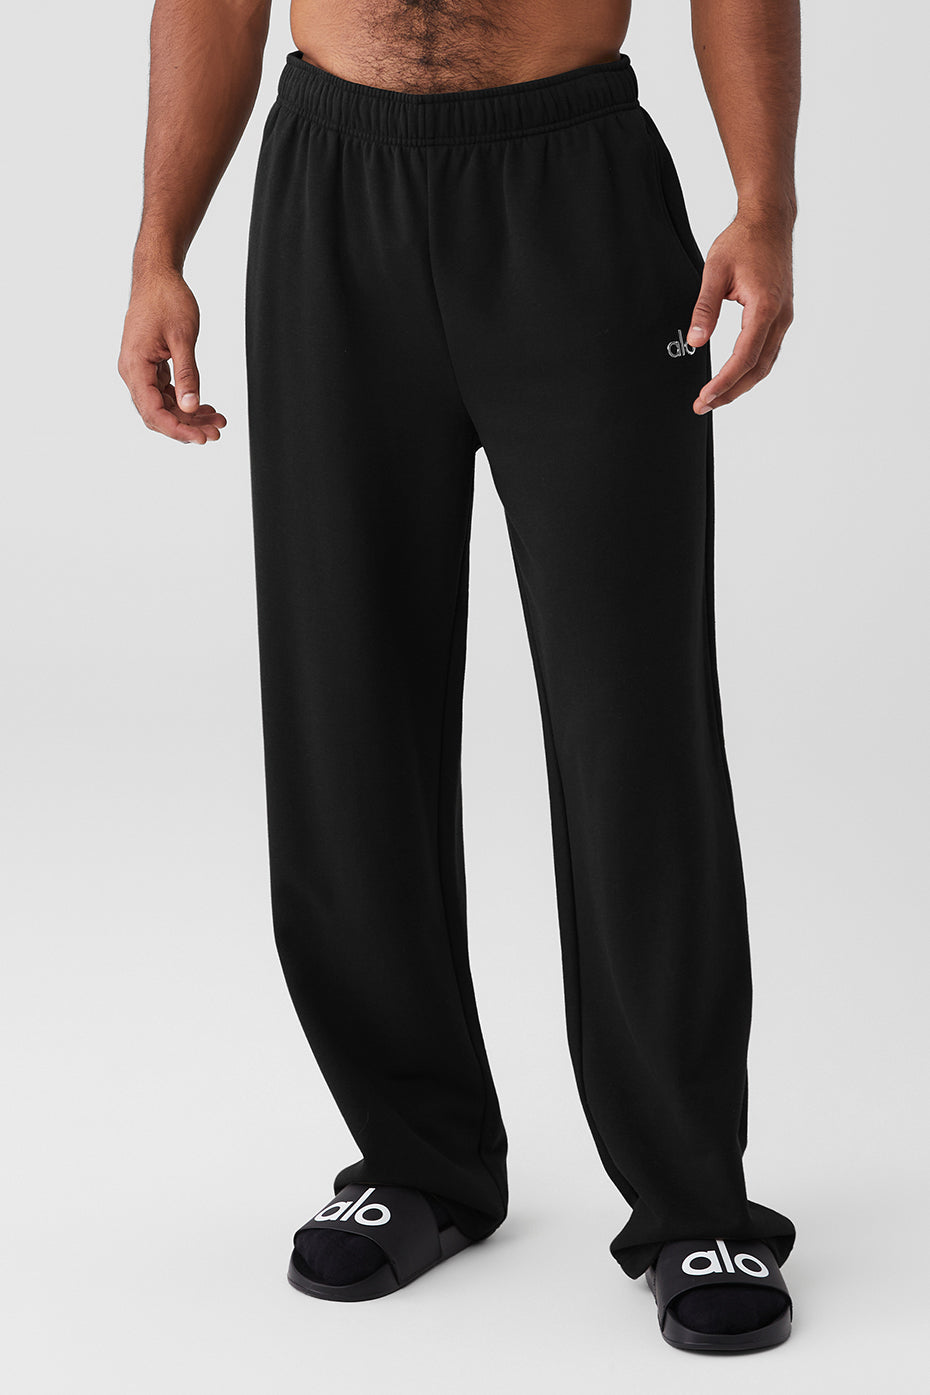 Alo Accolade Sweatpants Black Women’s Size Medium New $118